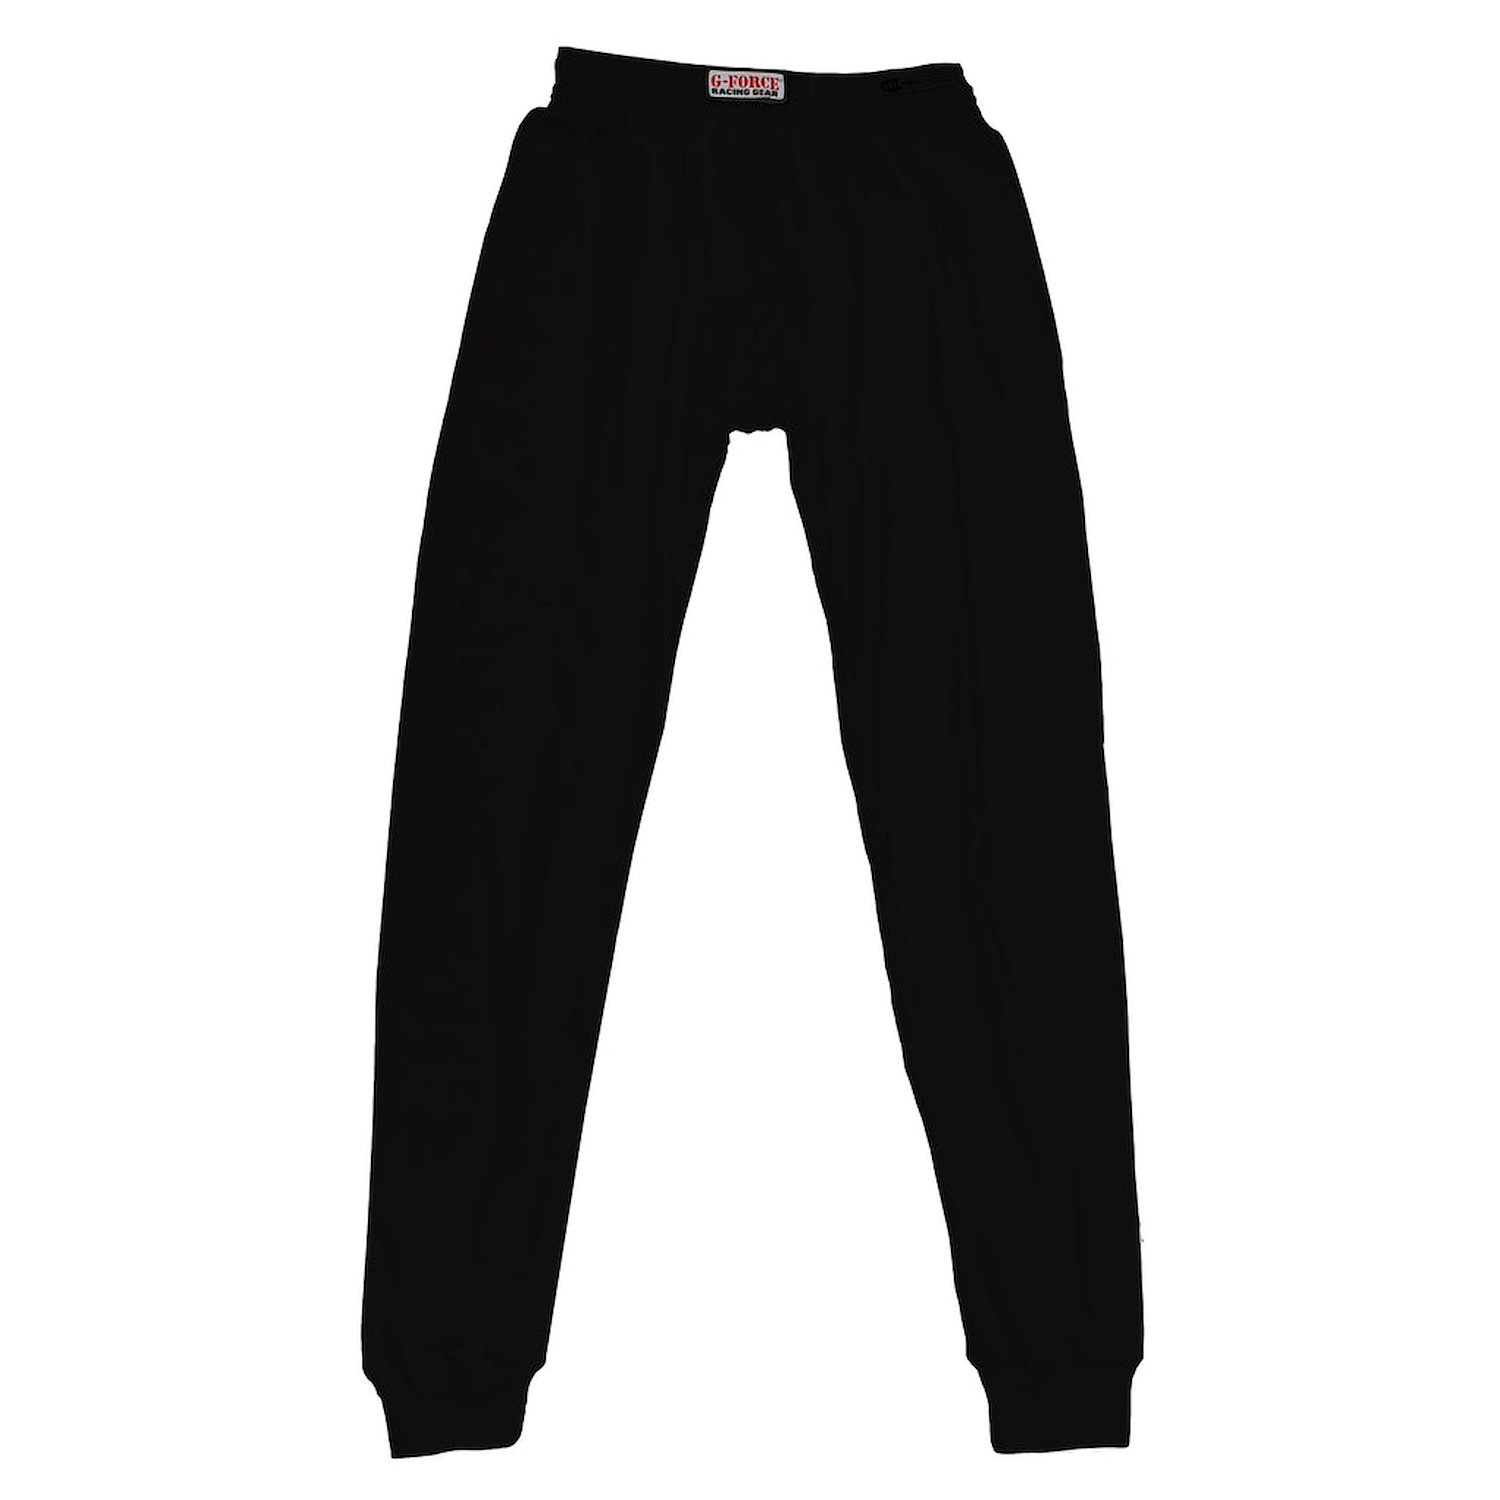 4161SMLBK Underwear Pants, Small, Black